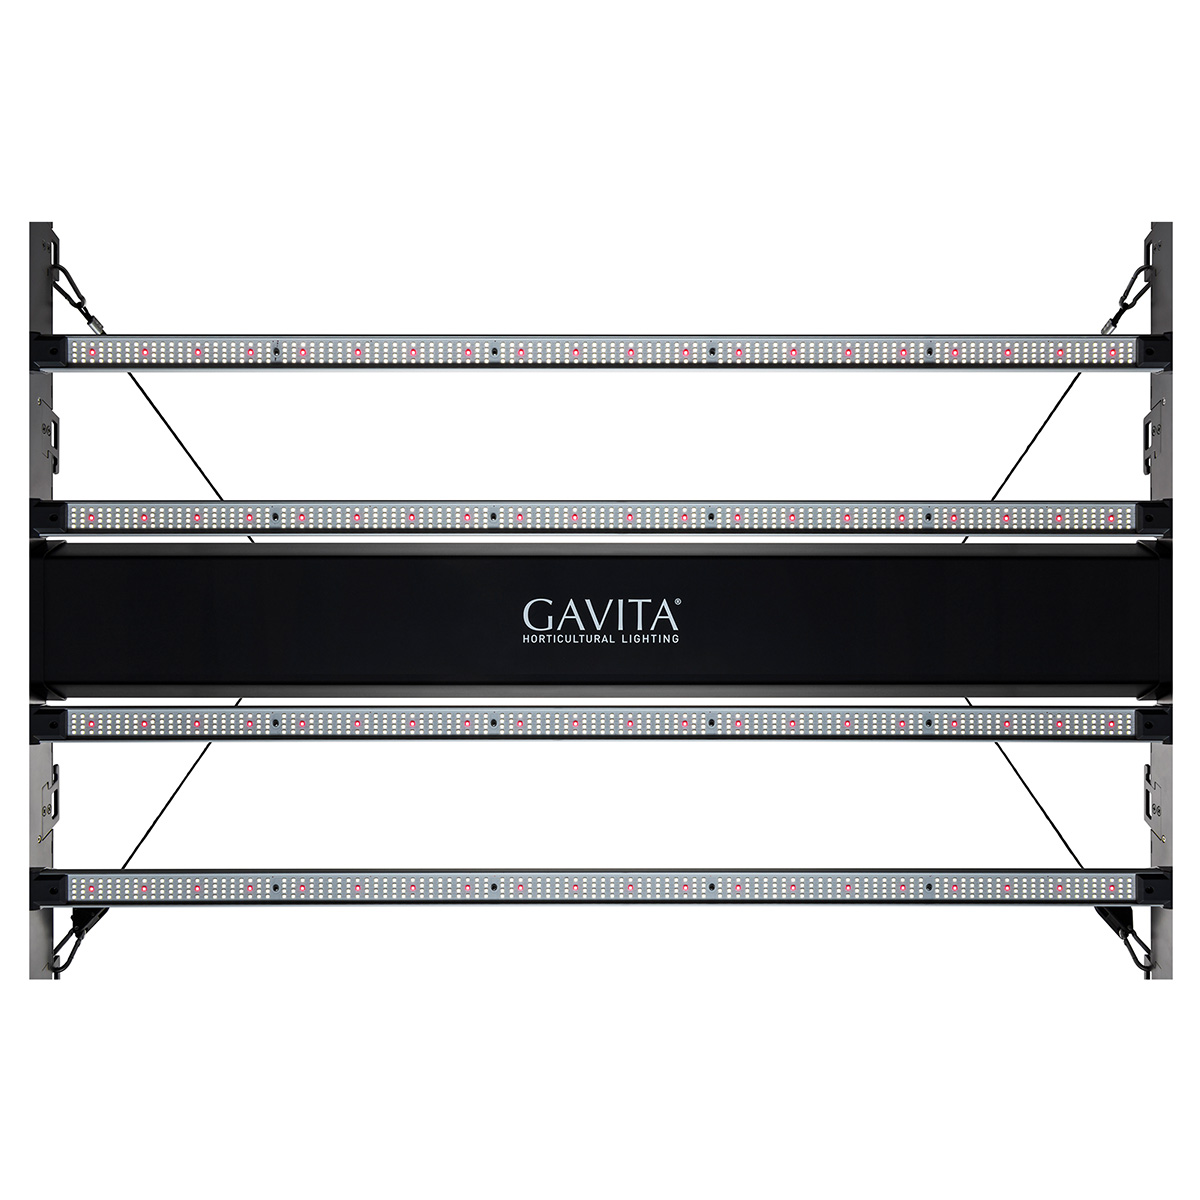 Gavita 2400e LED Grow Light Front View